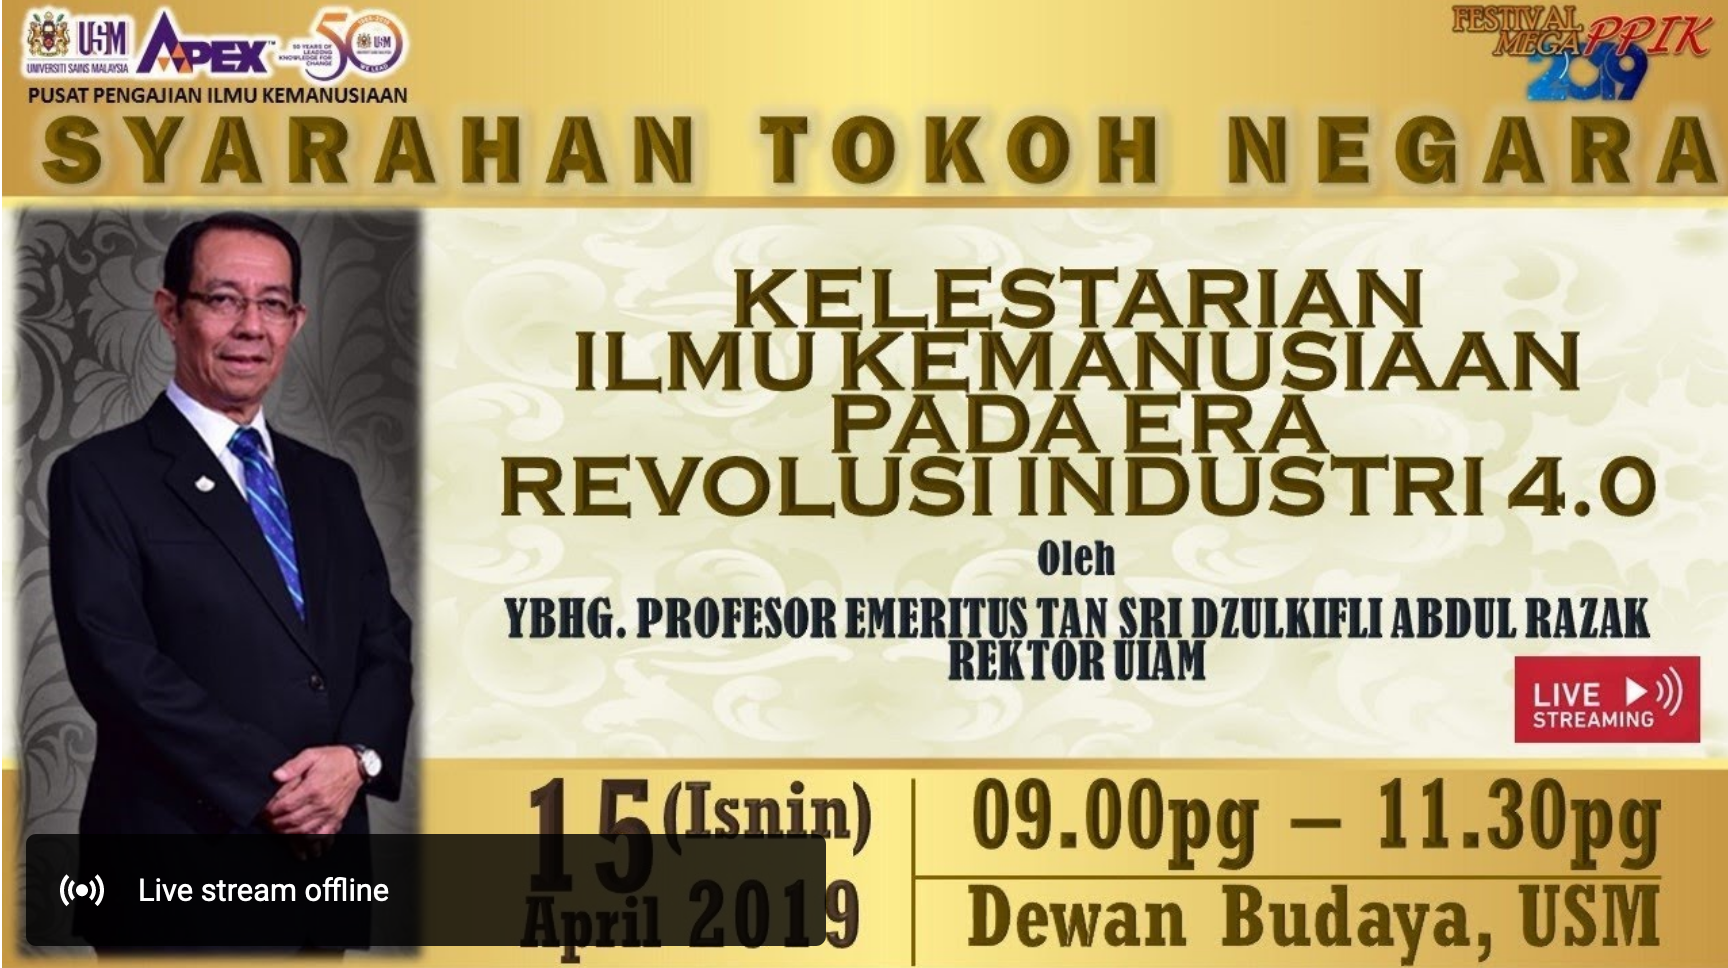 USM Live at 9:00 am: Syarahan Tokoh Negara Prof. Emeritus Tan Sri Dzulkifli Abdul Razak 